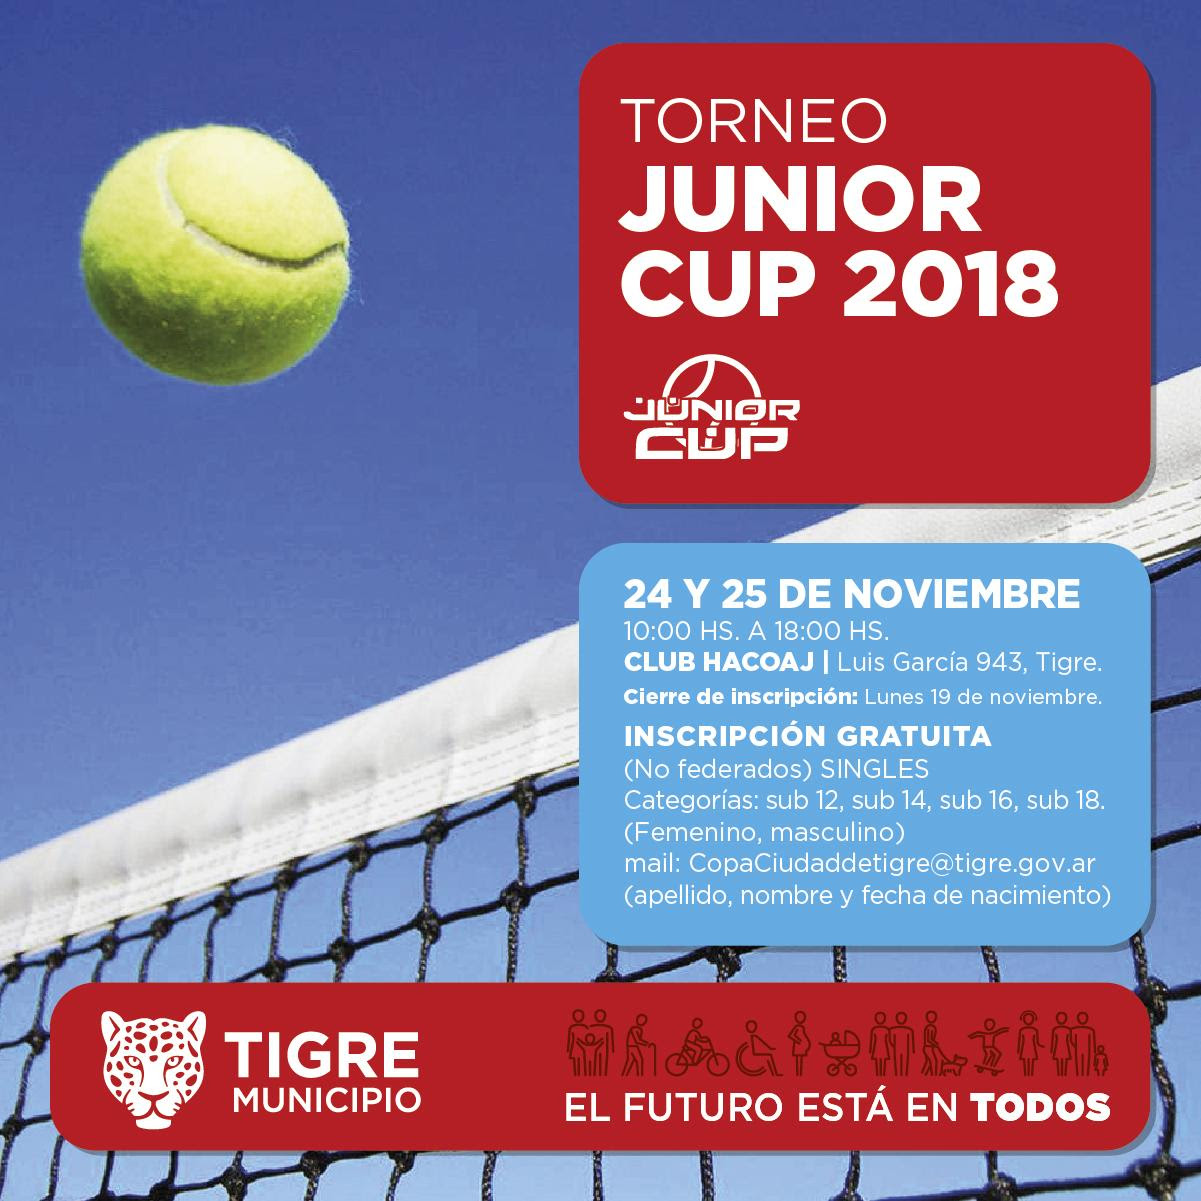  Tenis: llega el Torneo Junior Cup 2018